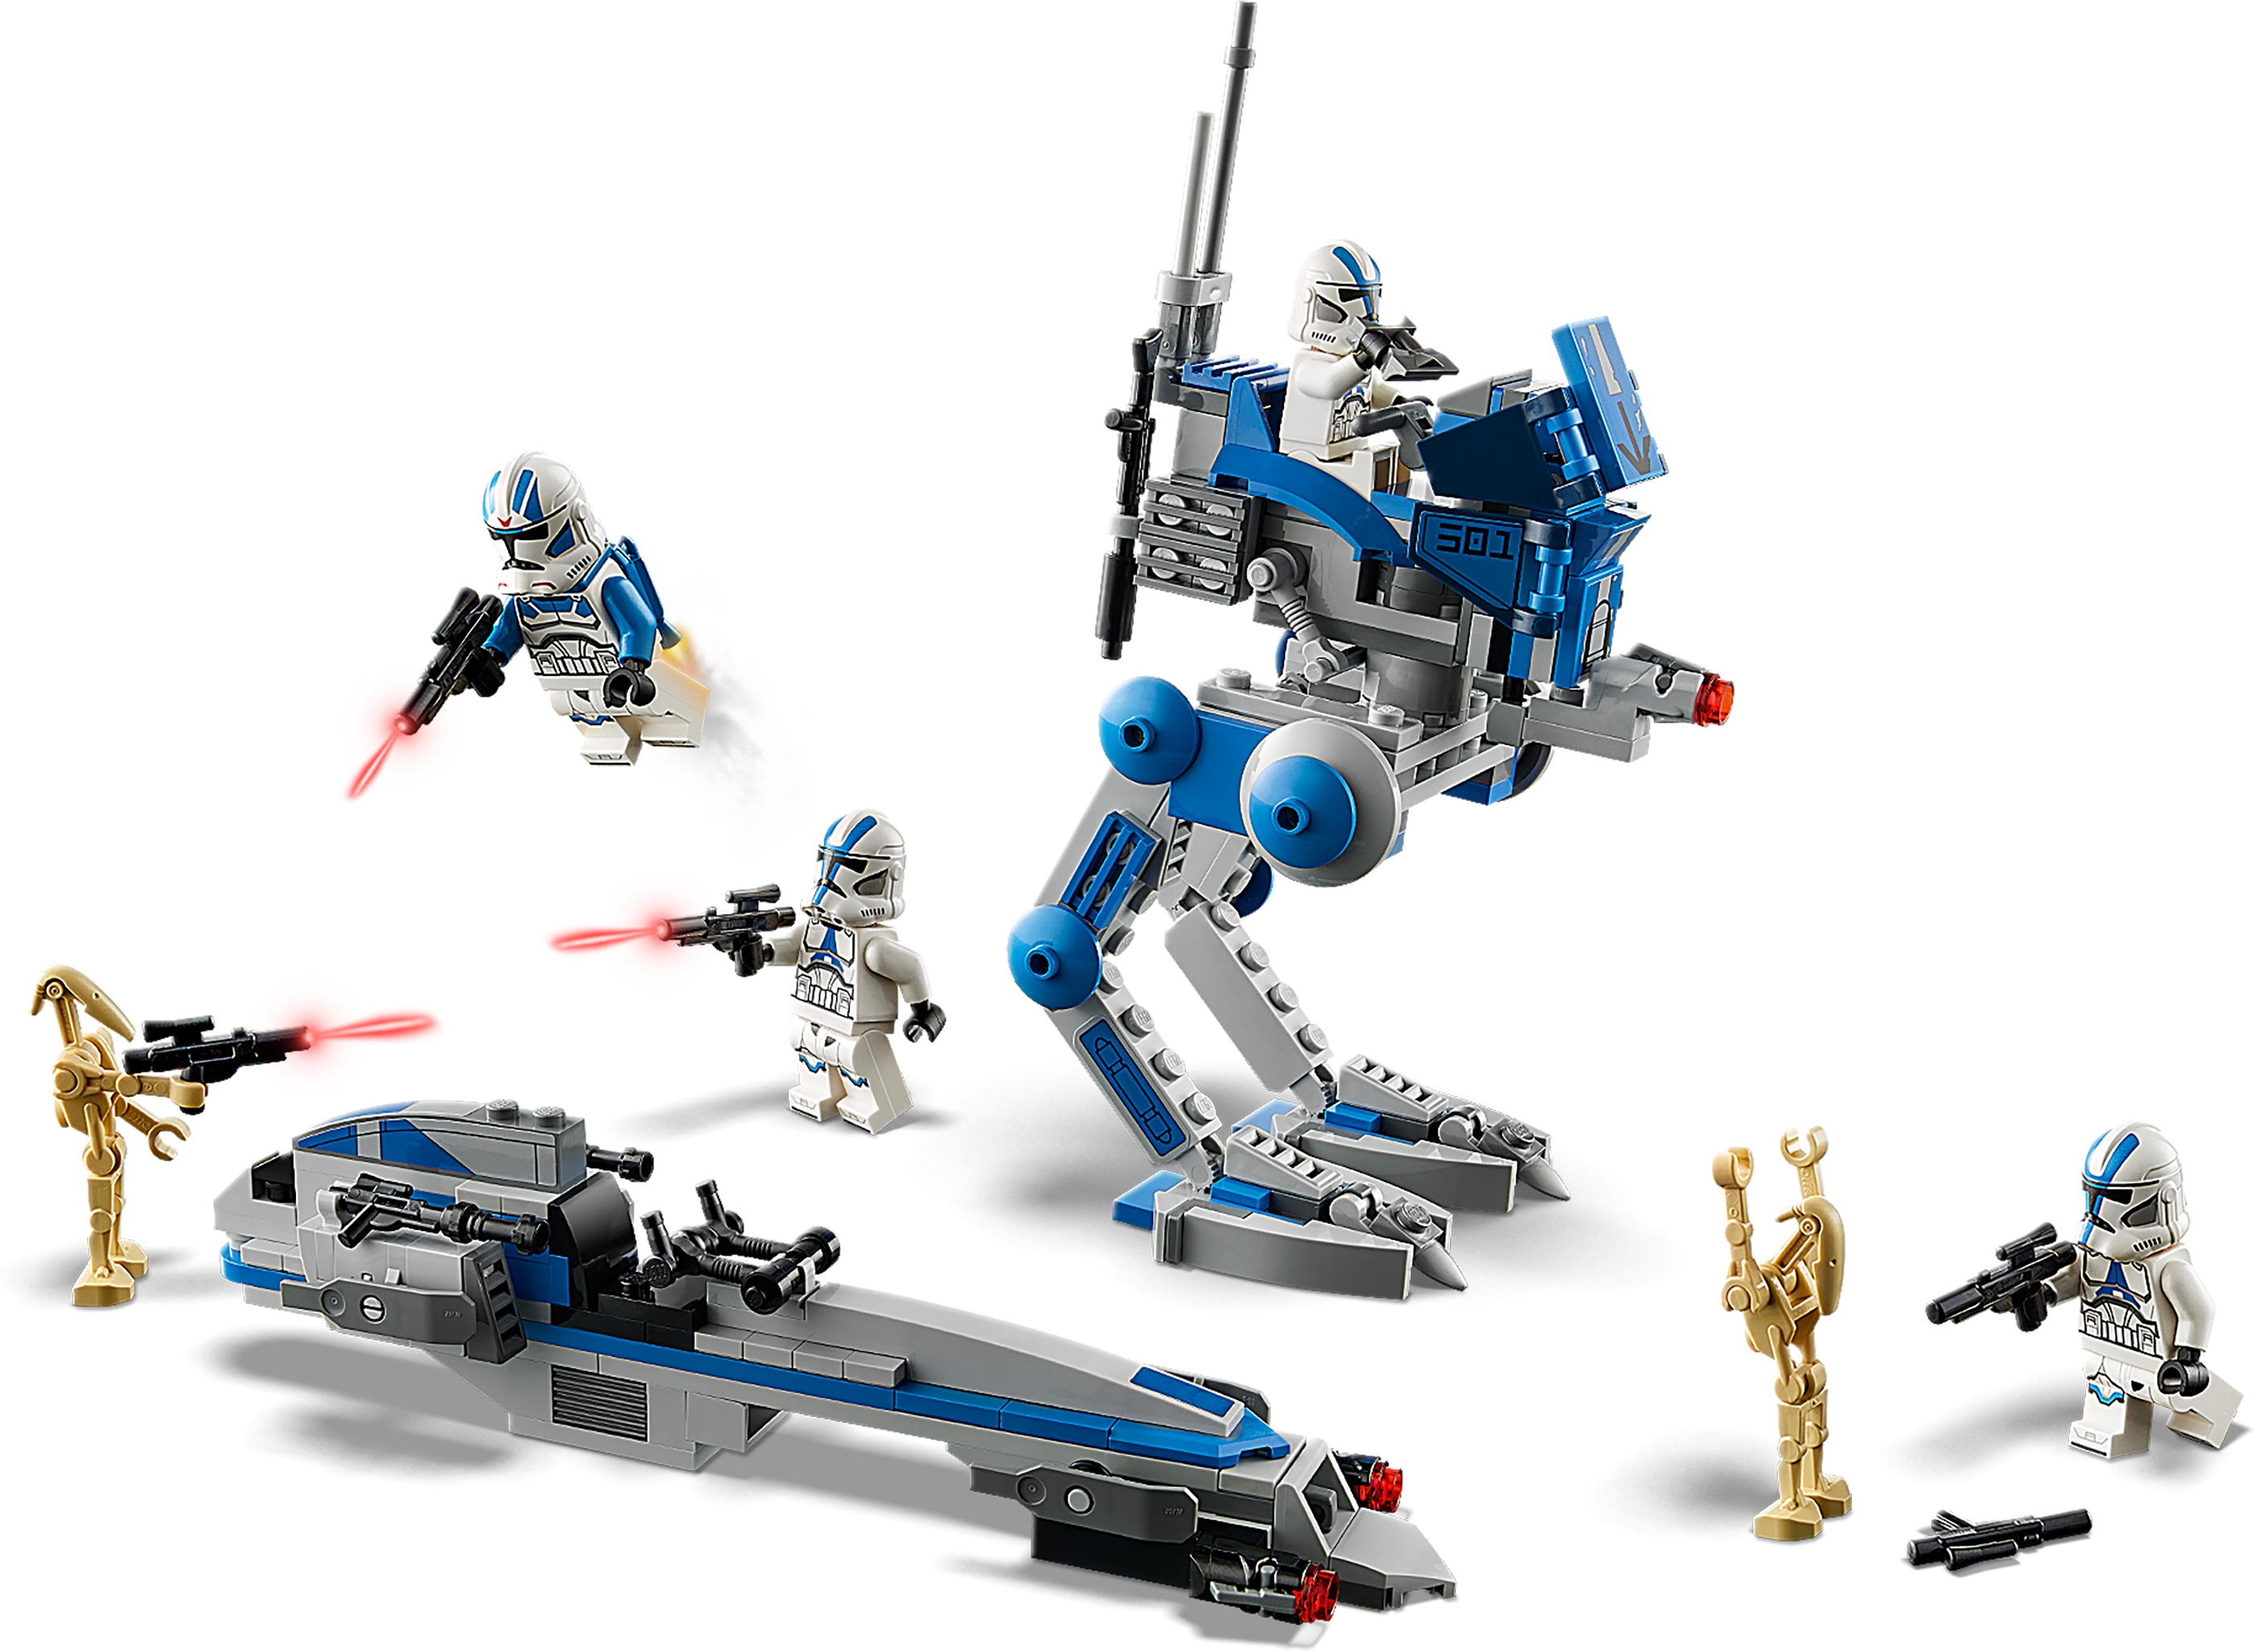 clone trooper lego